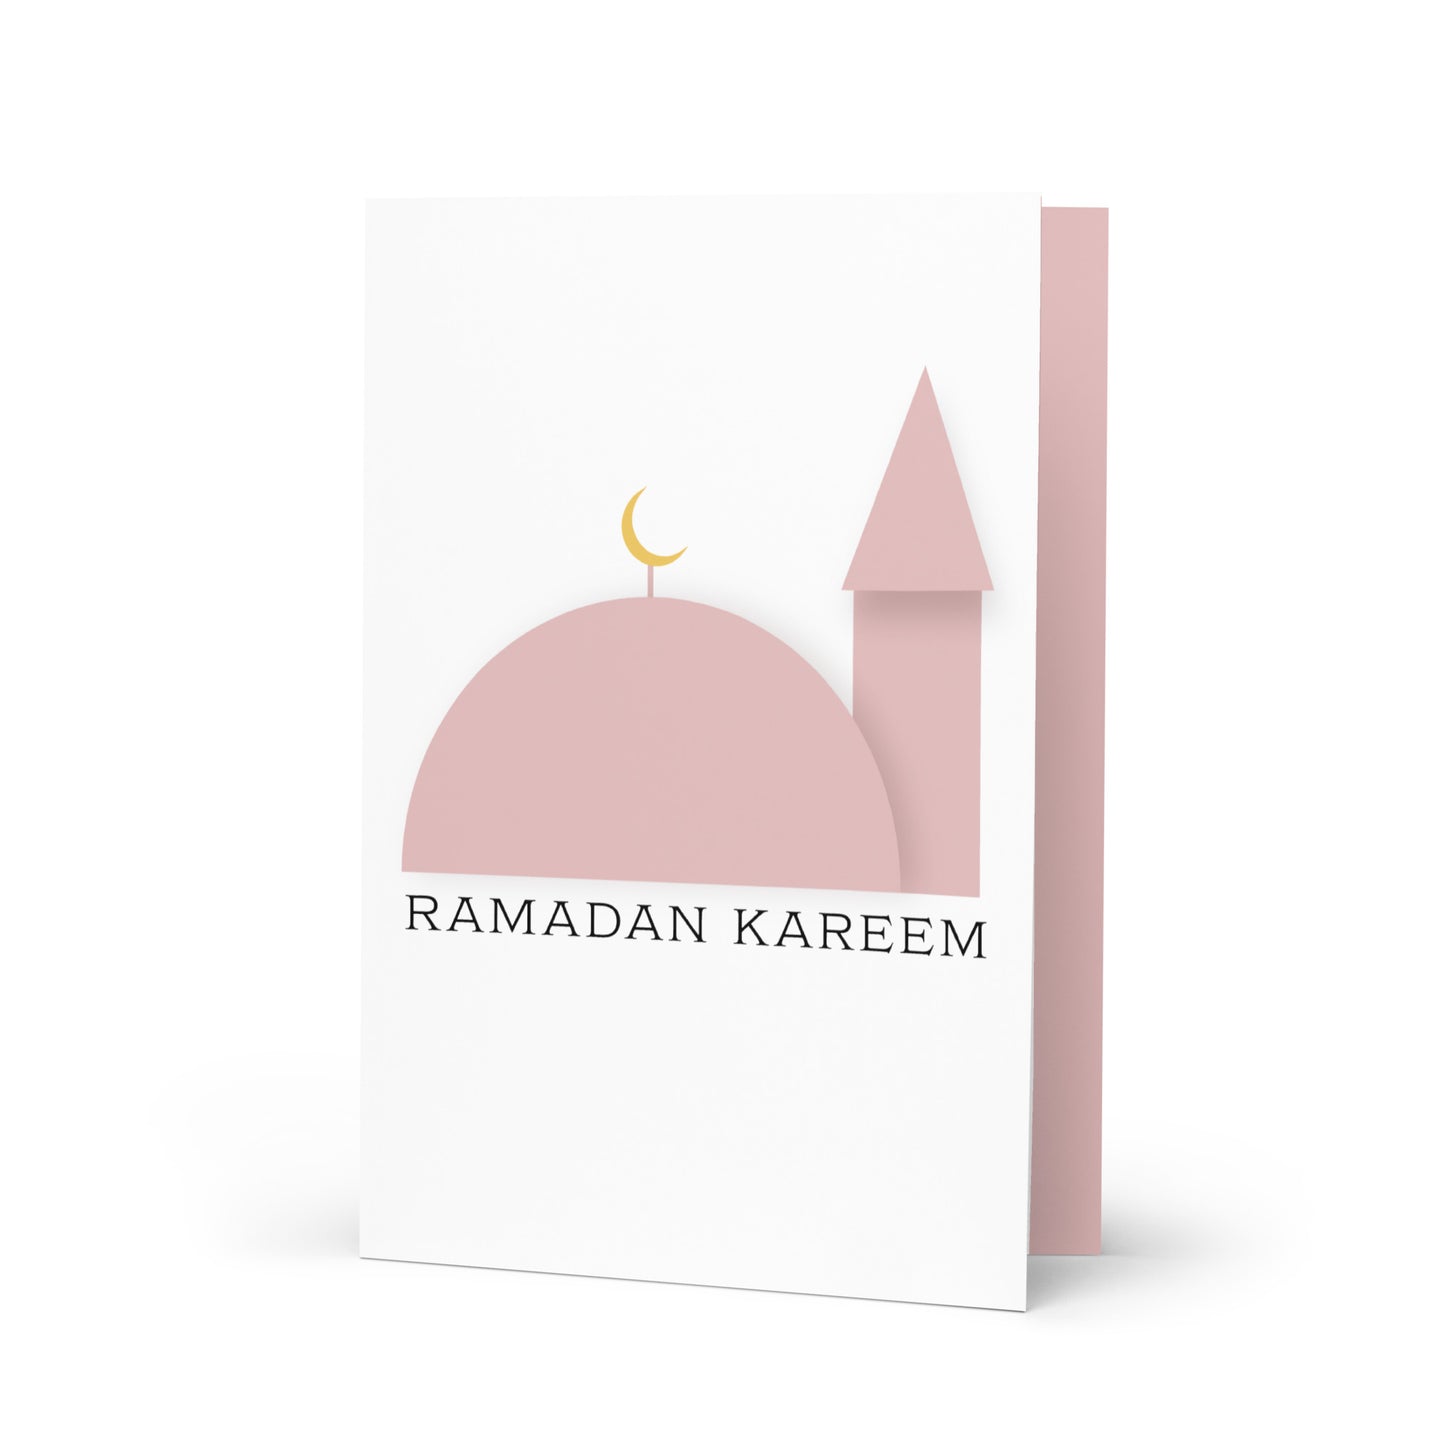 Ramadan Kareem - Greeting card